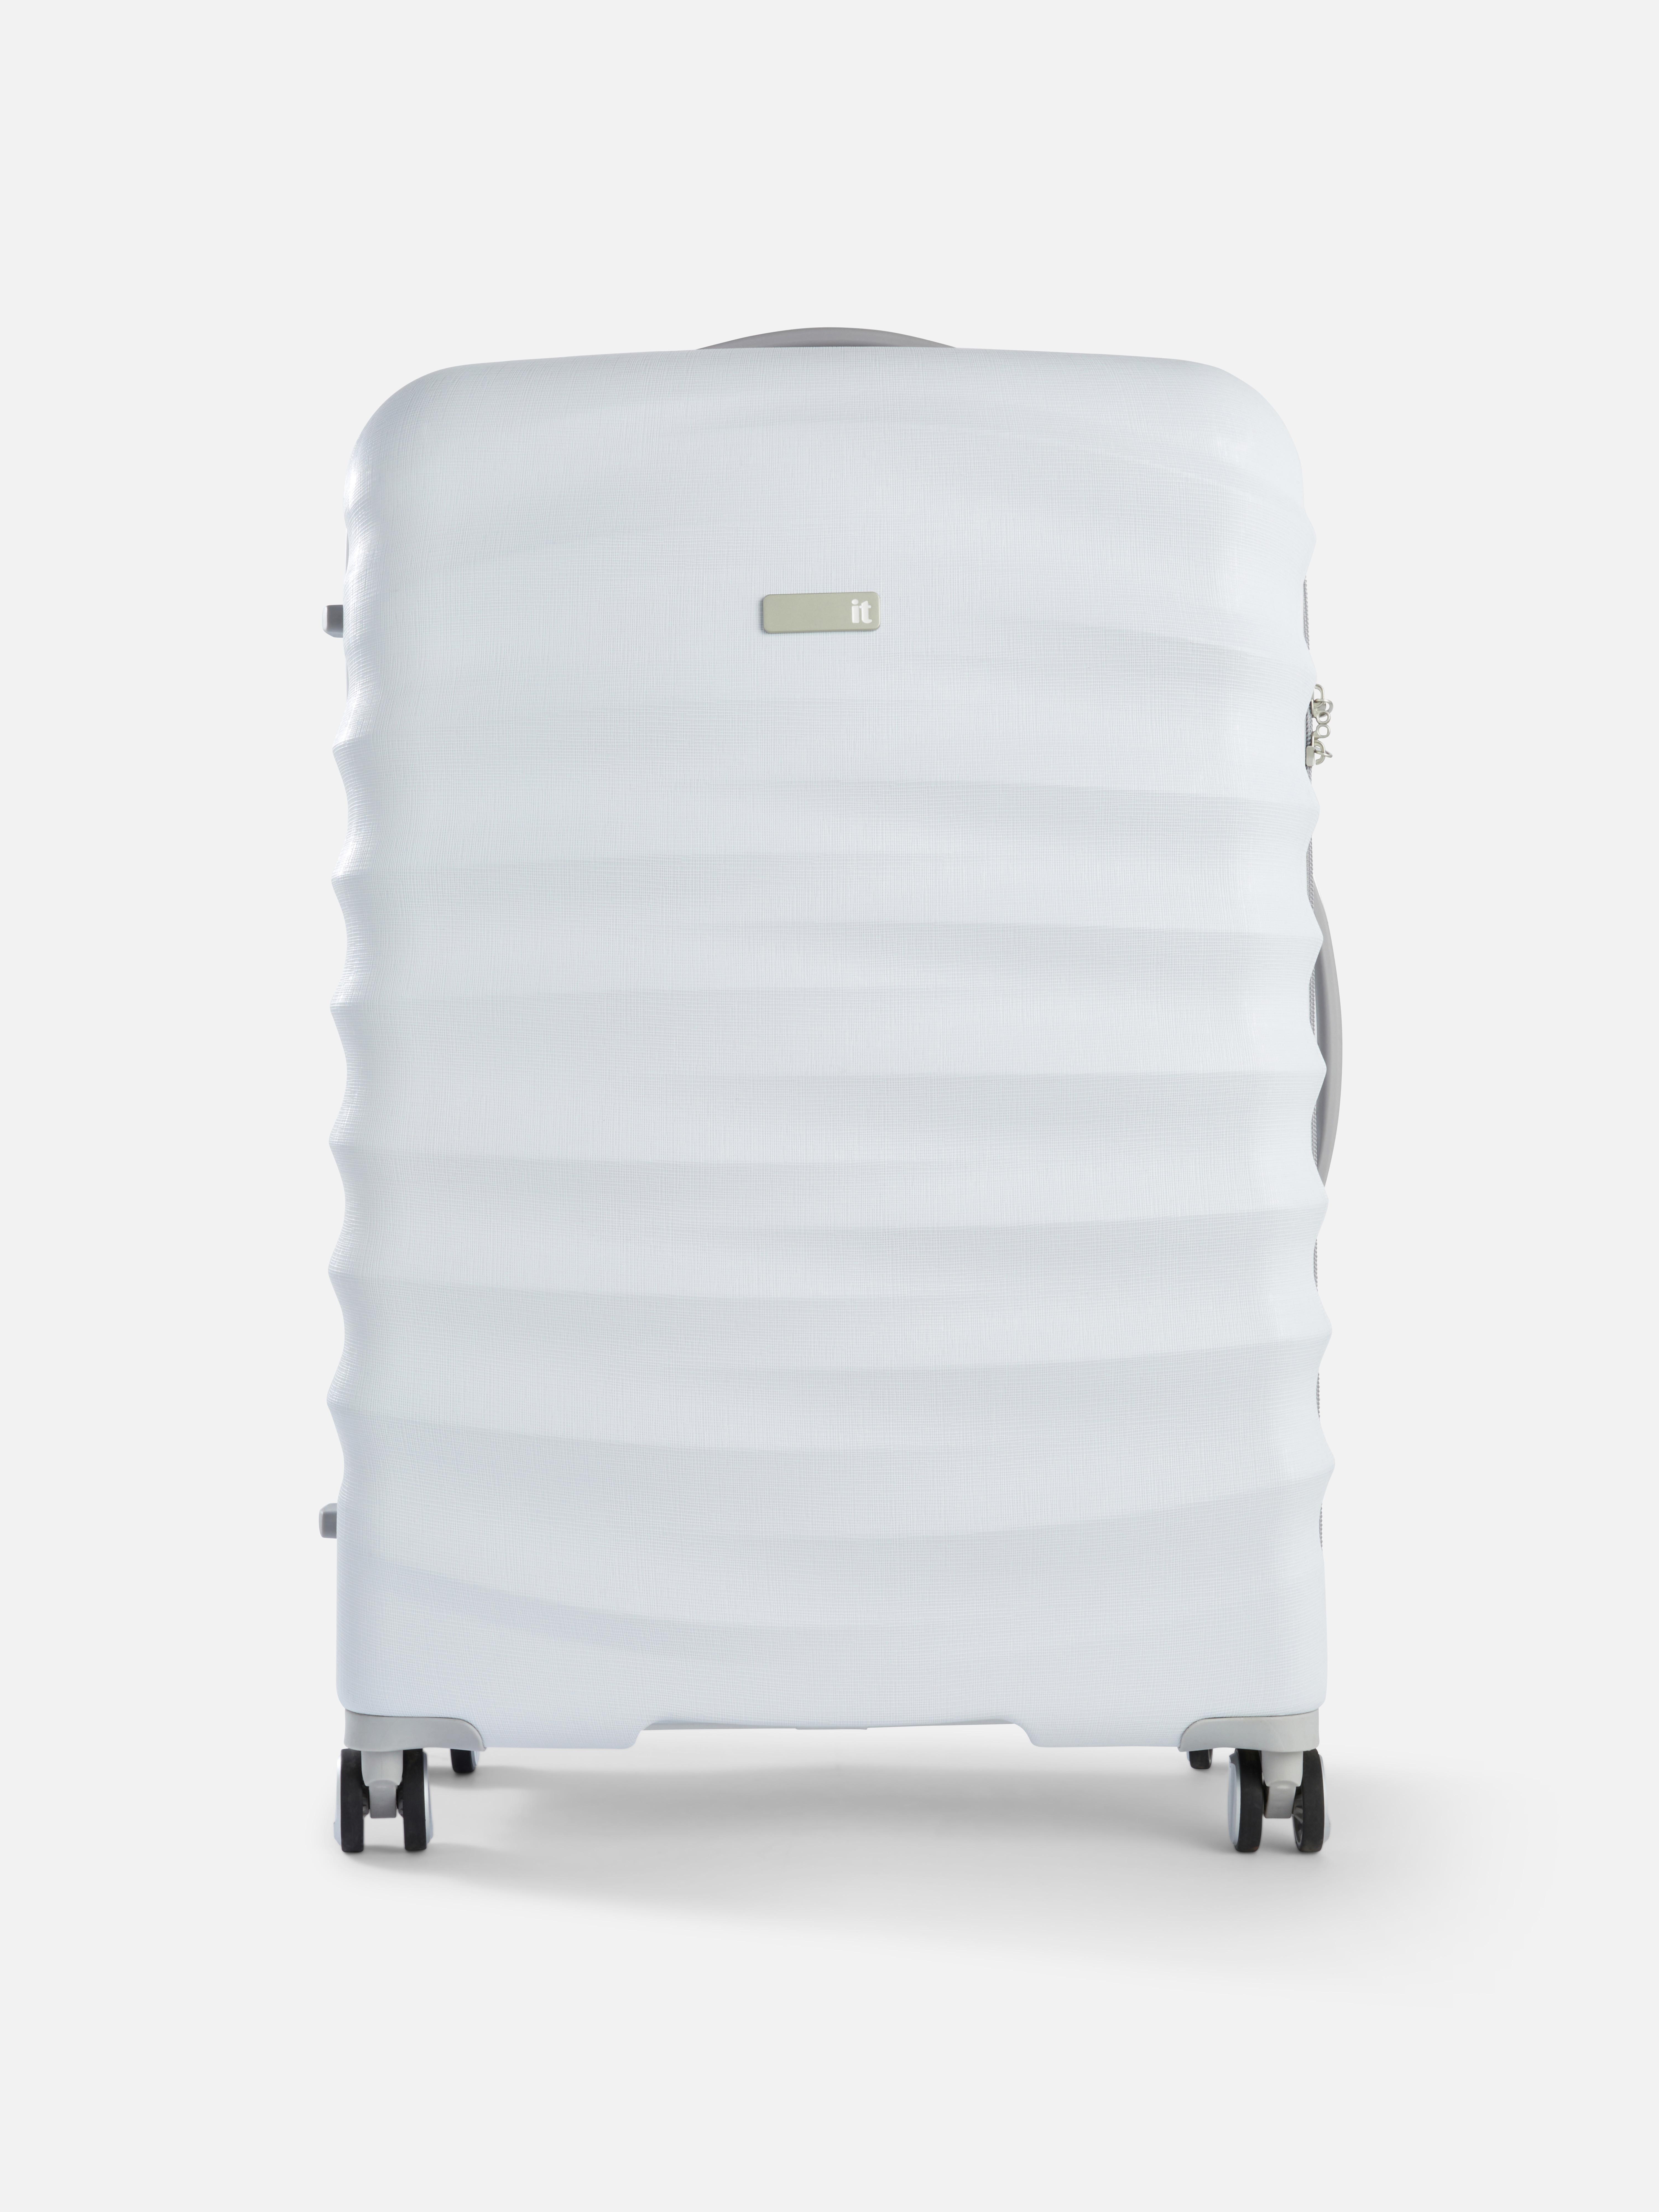 it Luggage Textured Hard Shell Suitcase White